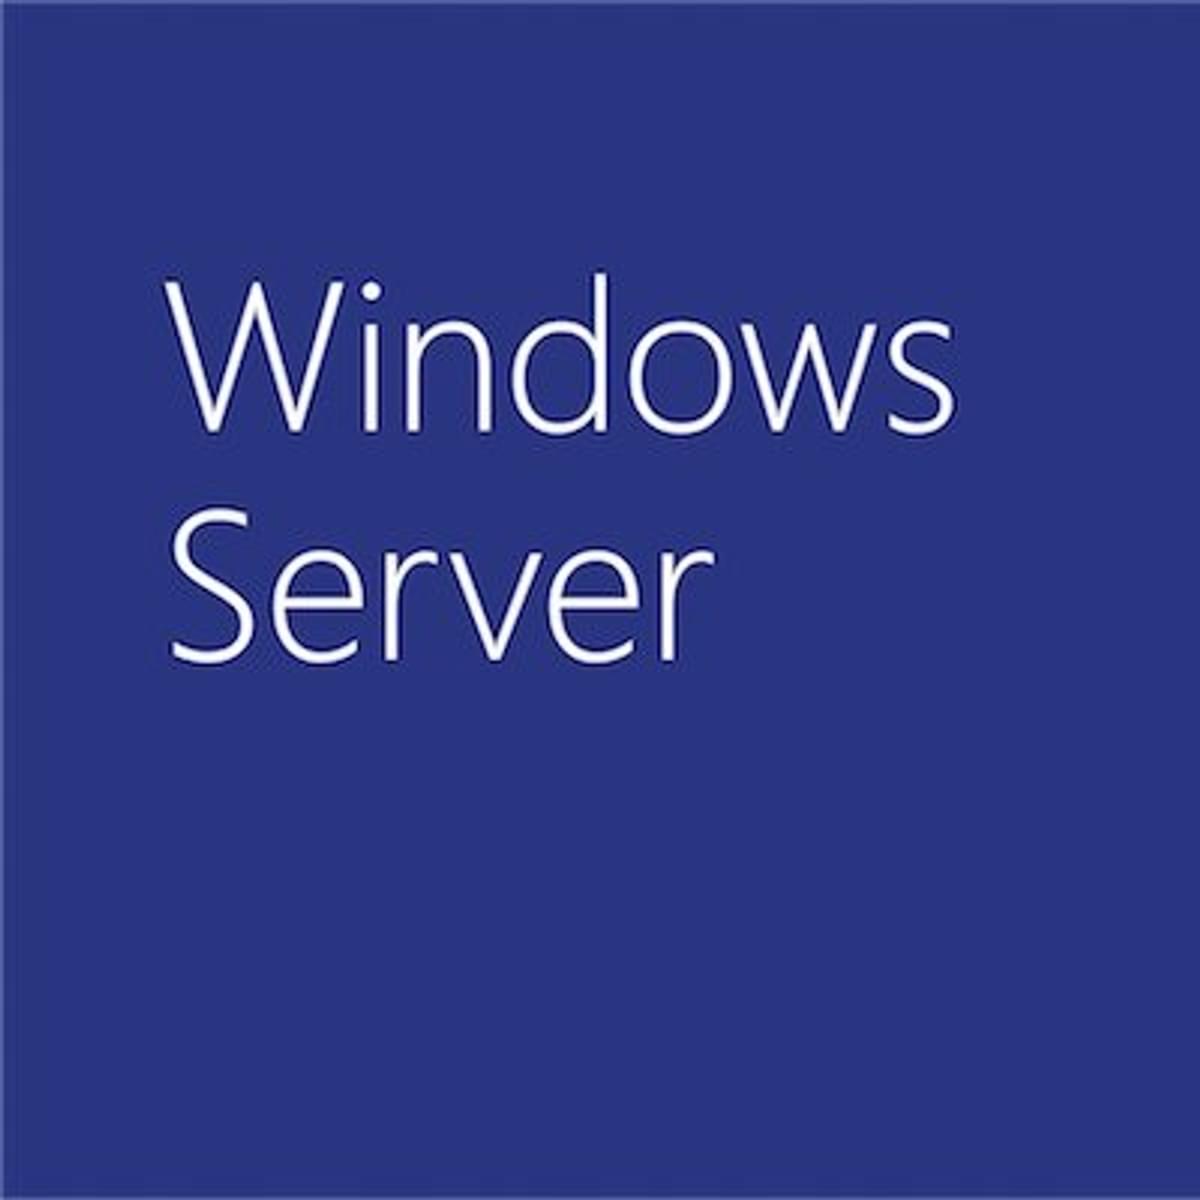 Einde ondersteuning voor Windows Server 2012 en 2012 R2 nadert image